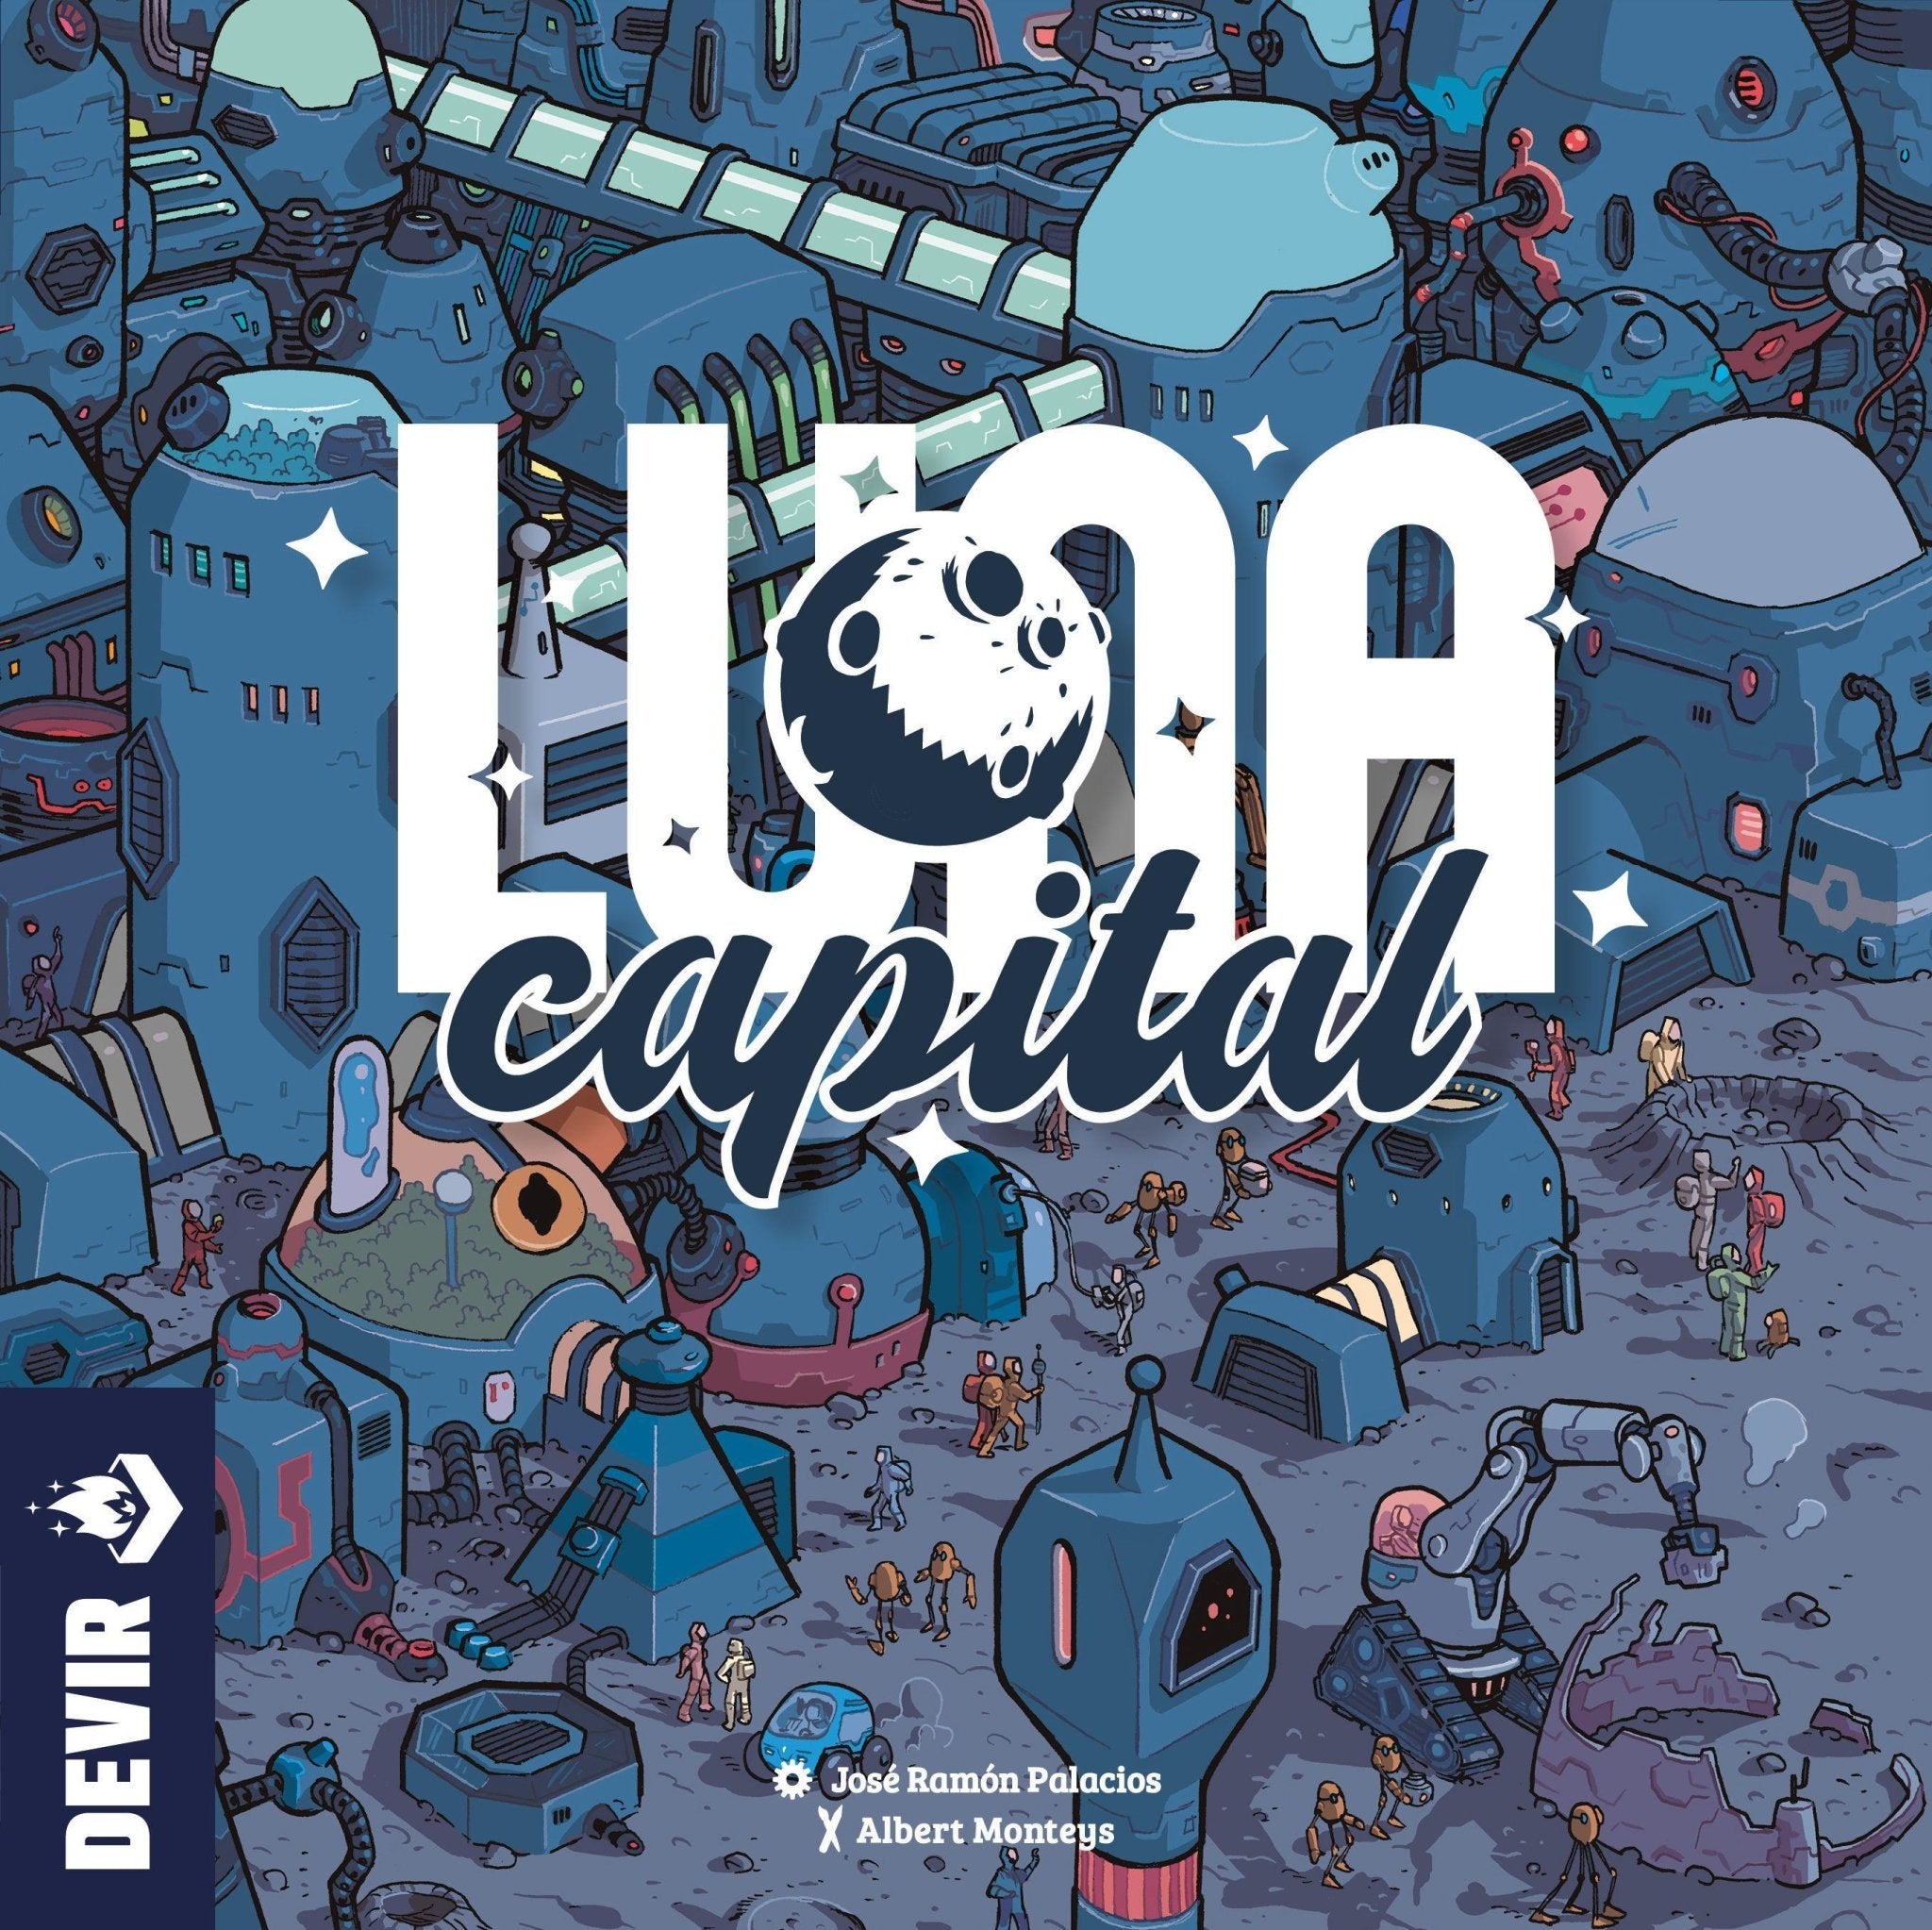 Luna Capital - Gaming Library